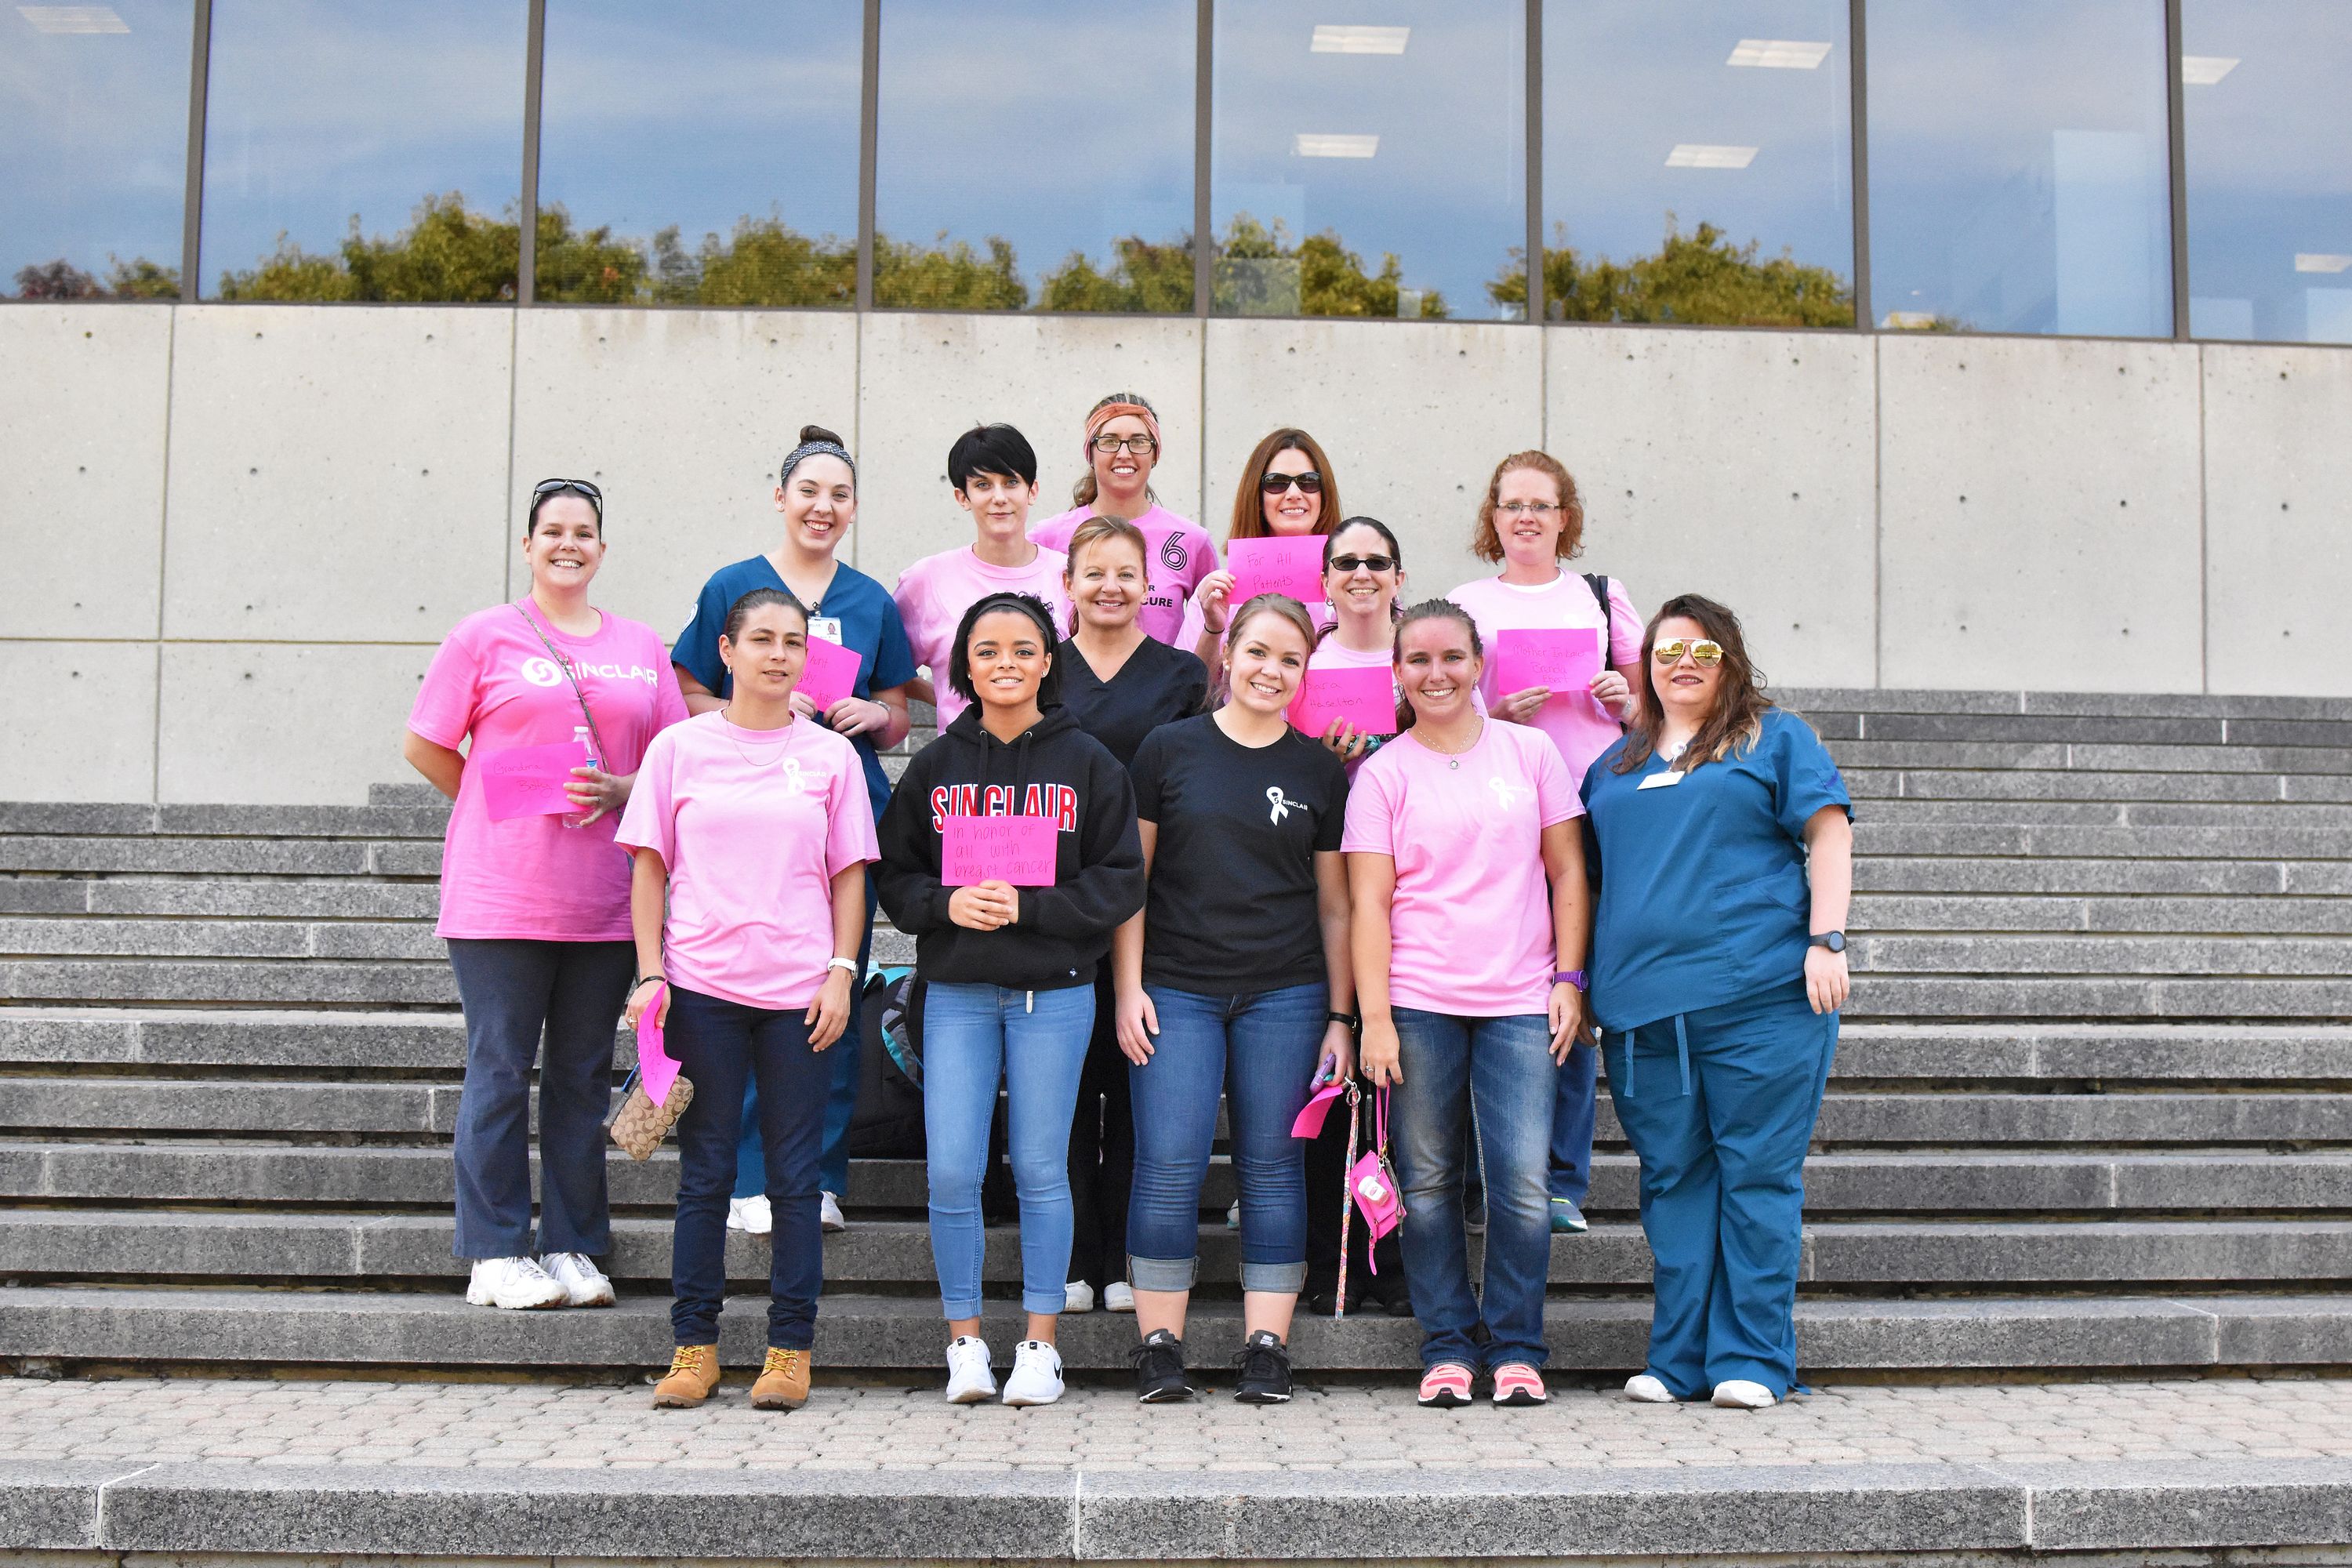 Student Medical Assistant Association's Breast Cancer Awareness Walk